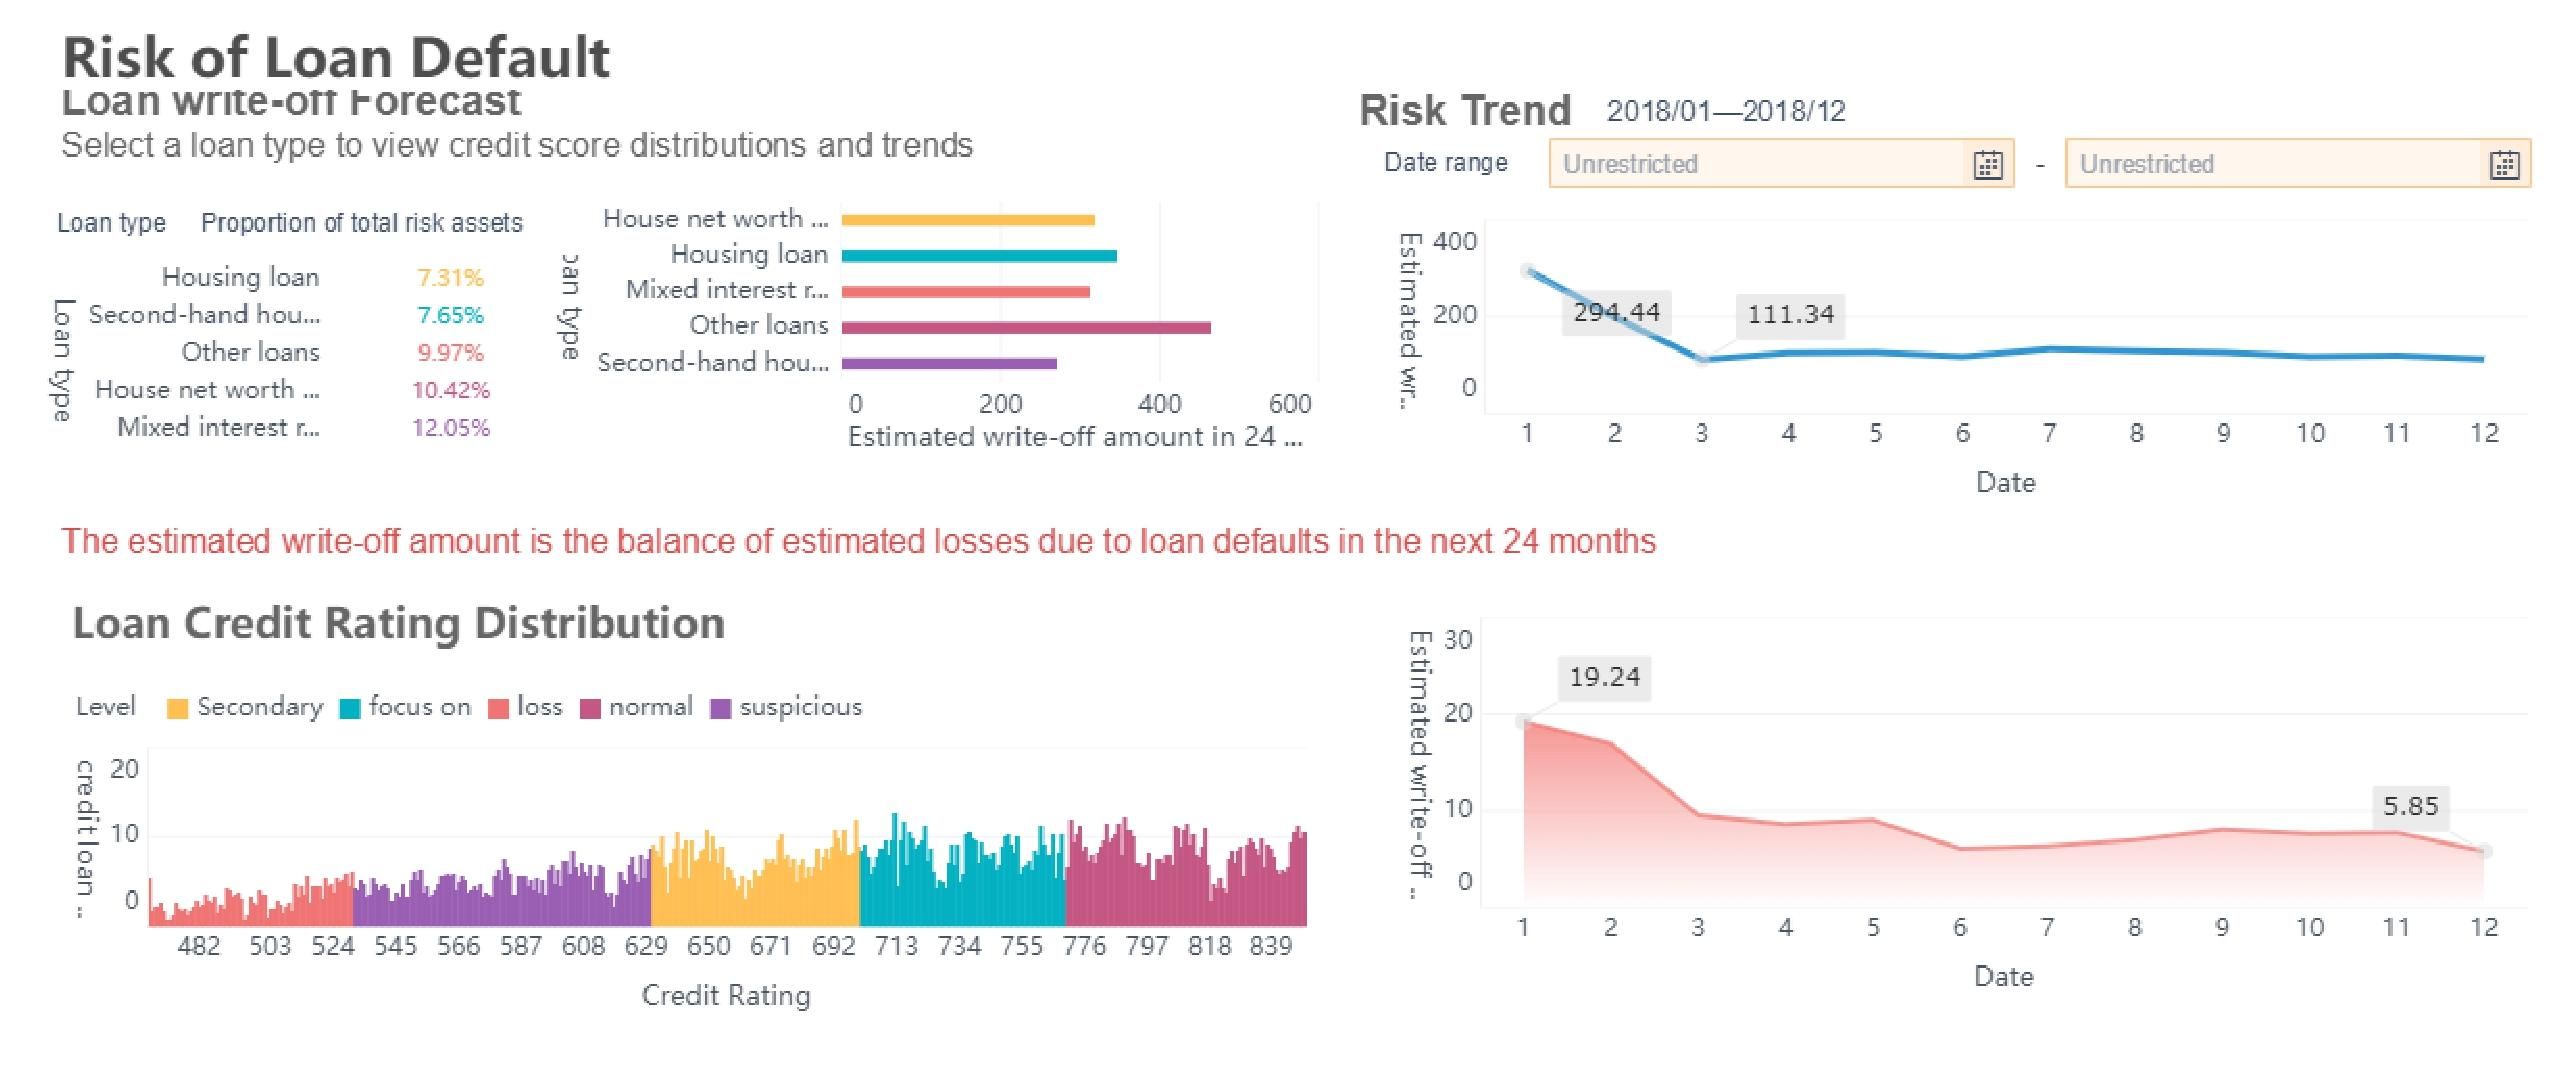 Loan_Default_Risk_Analysis_page-0001 (1).jpg